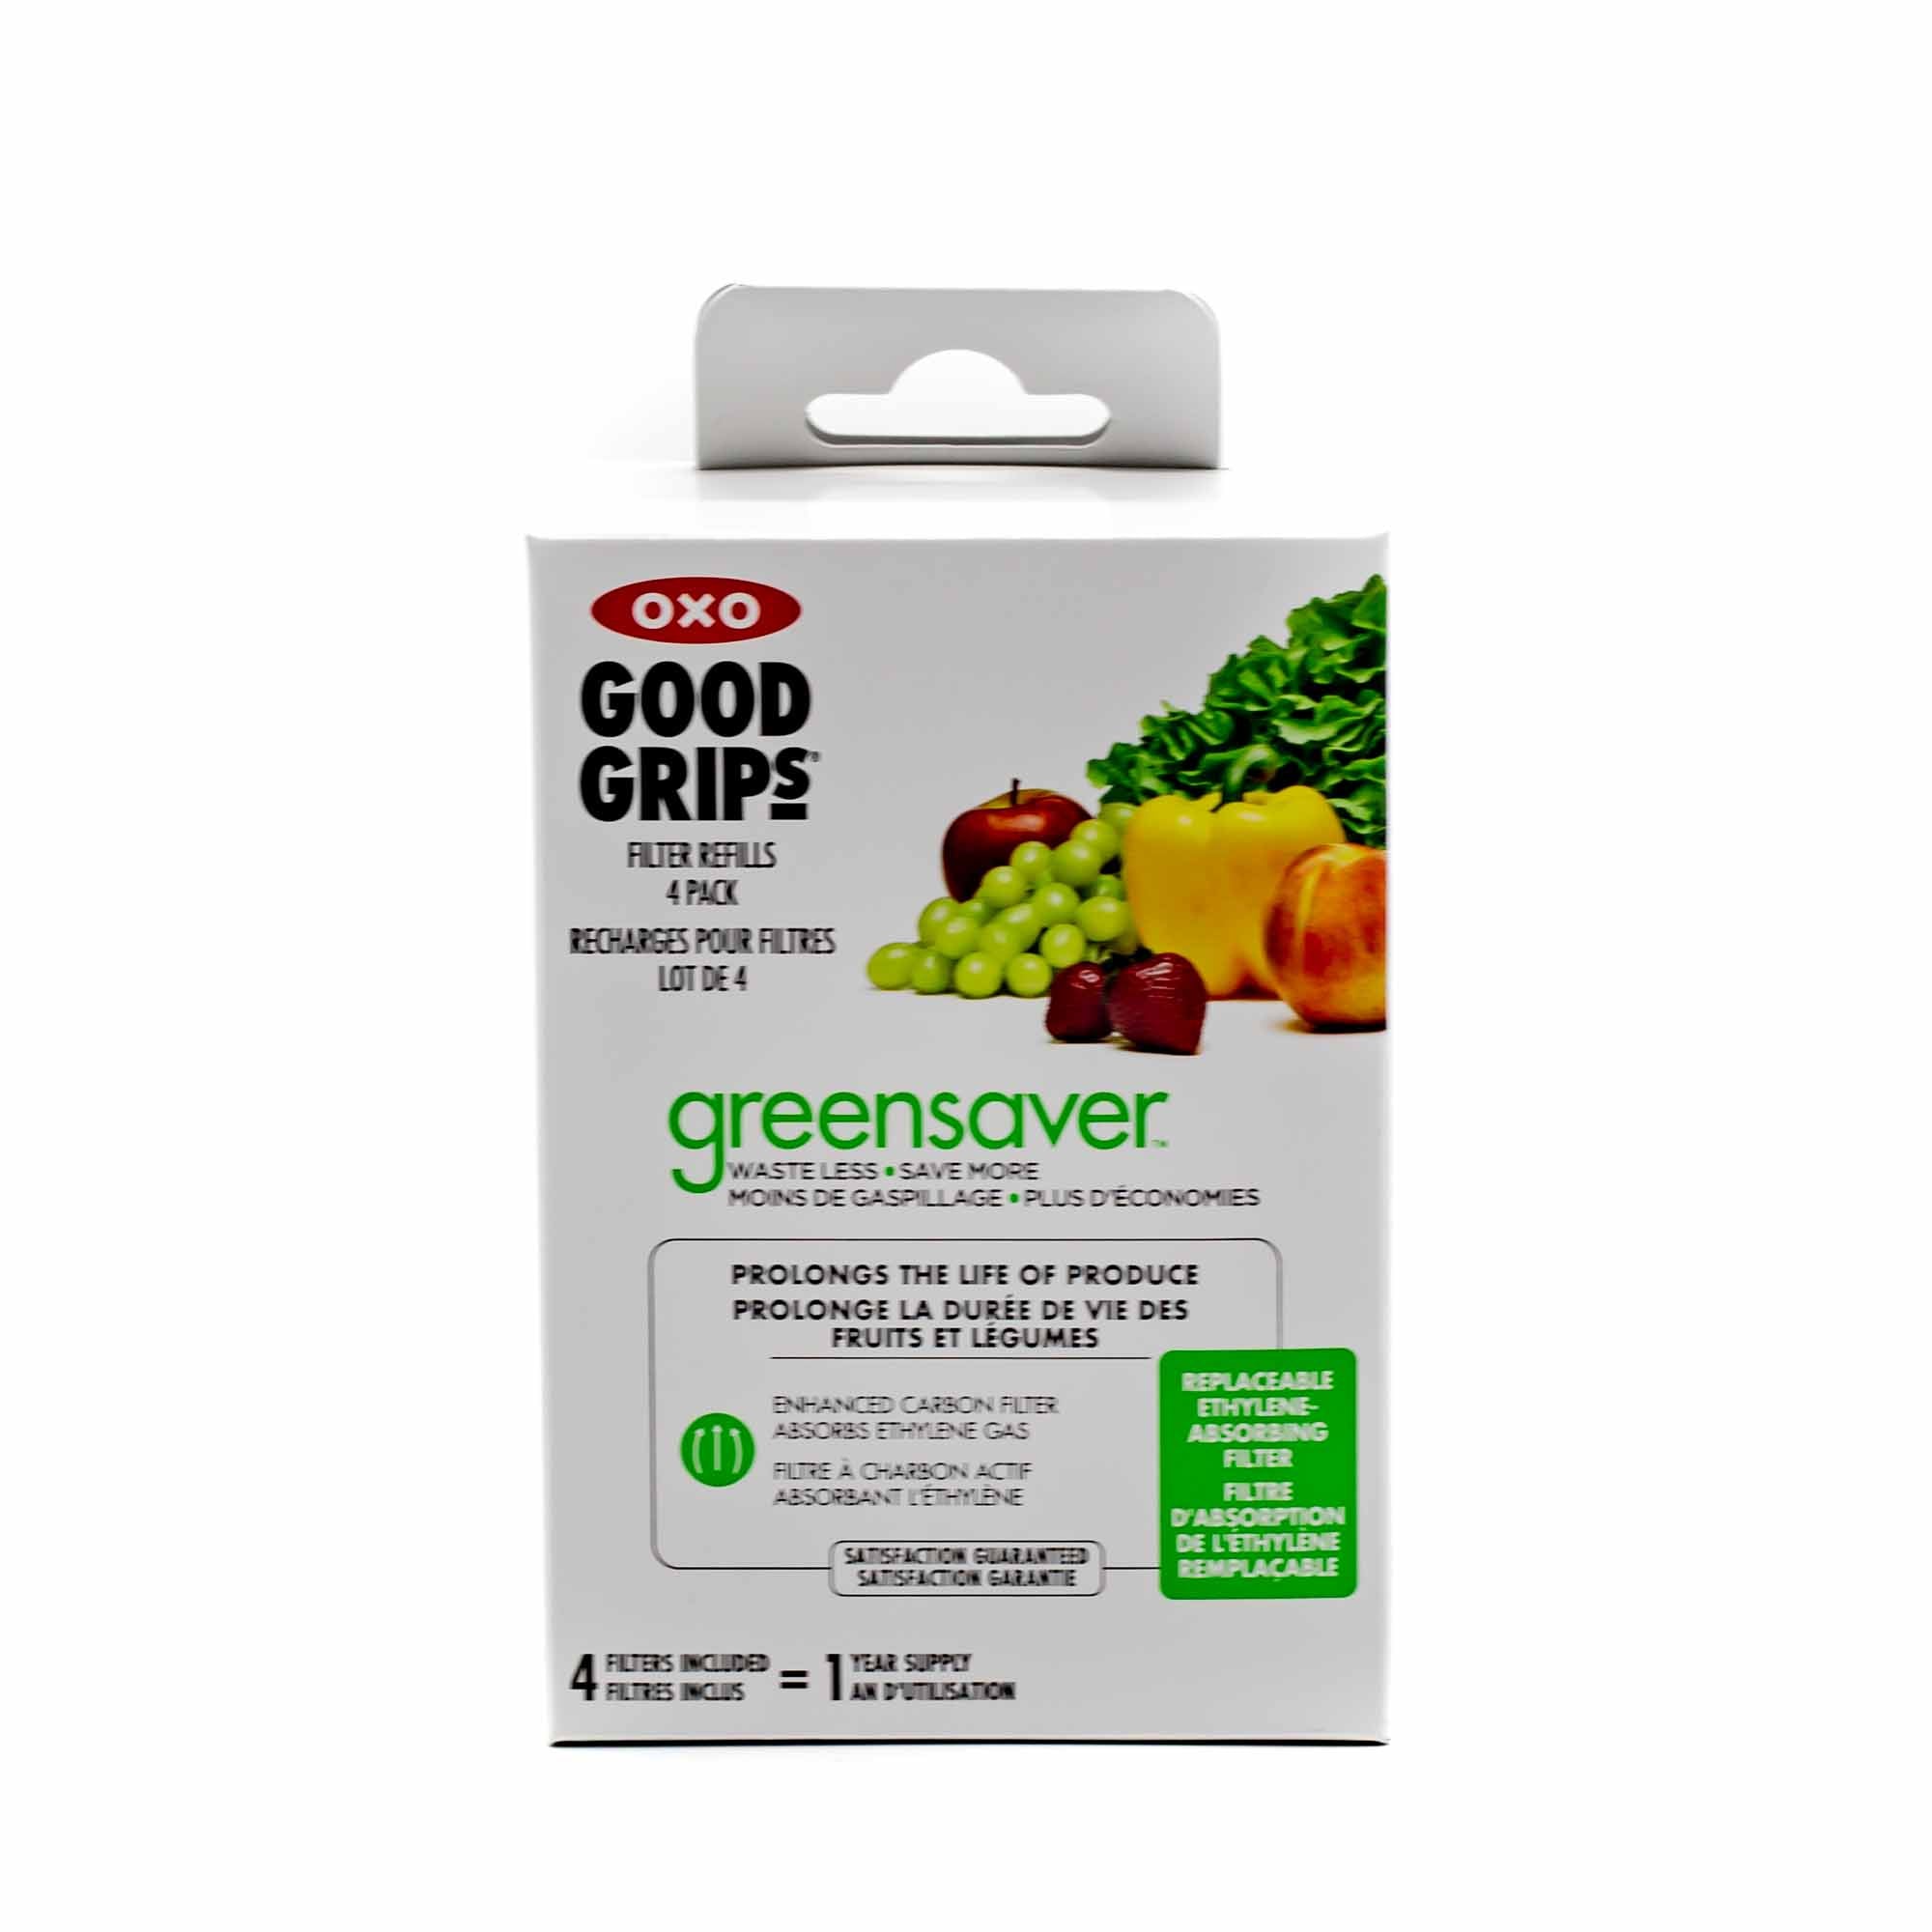 Greensaver Carbon Filter Refills - 4 pack